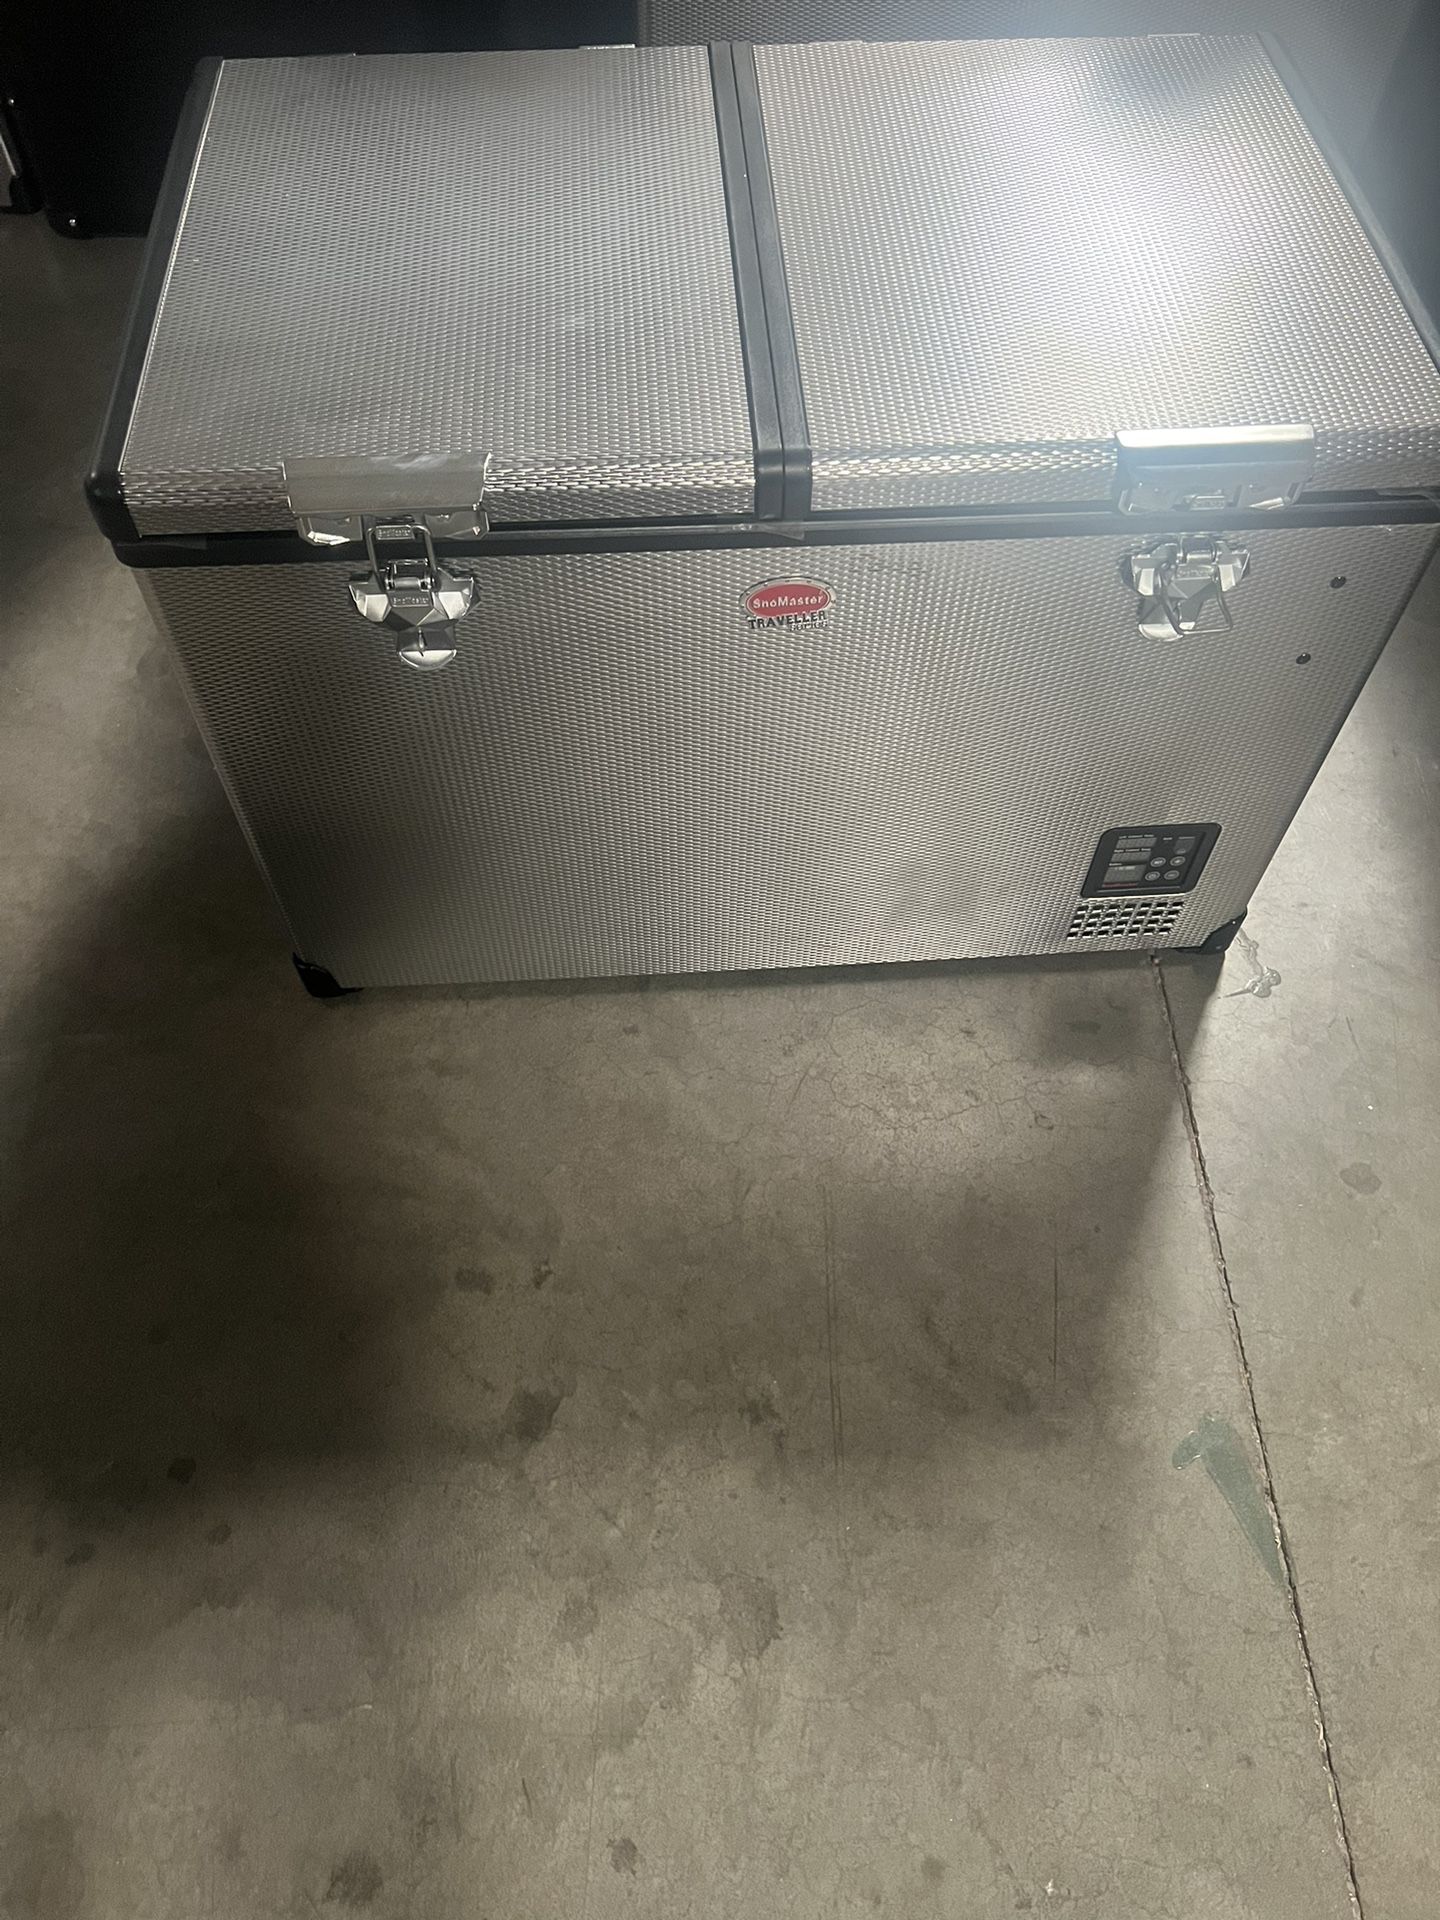 Snowmaster Portable Refrigerator Brand New